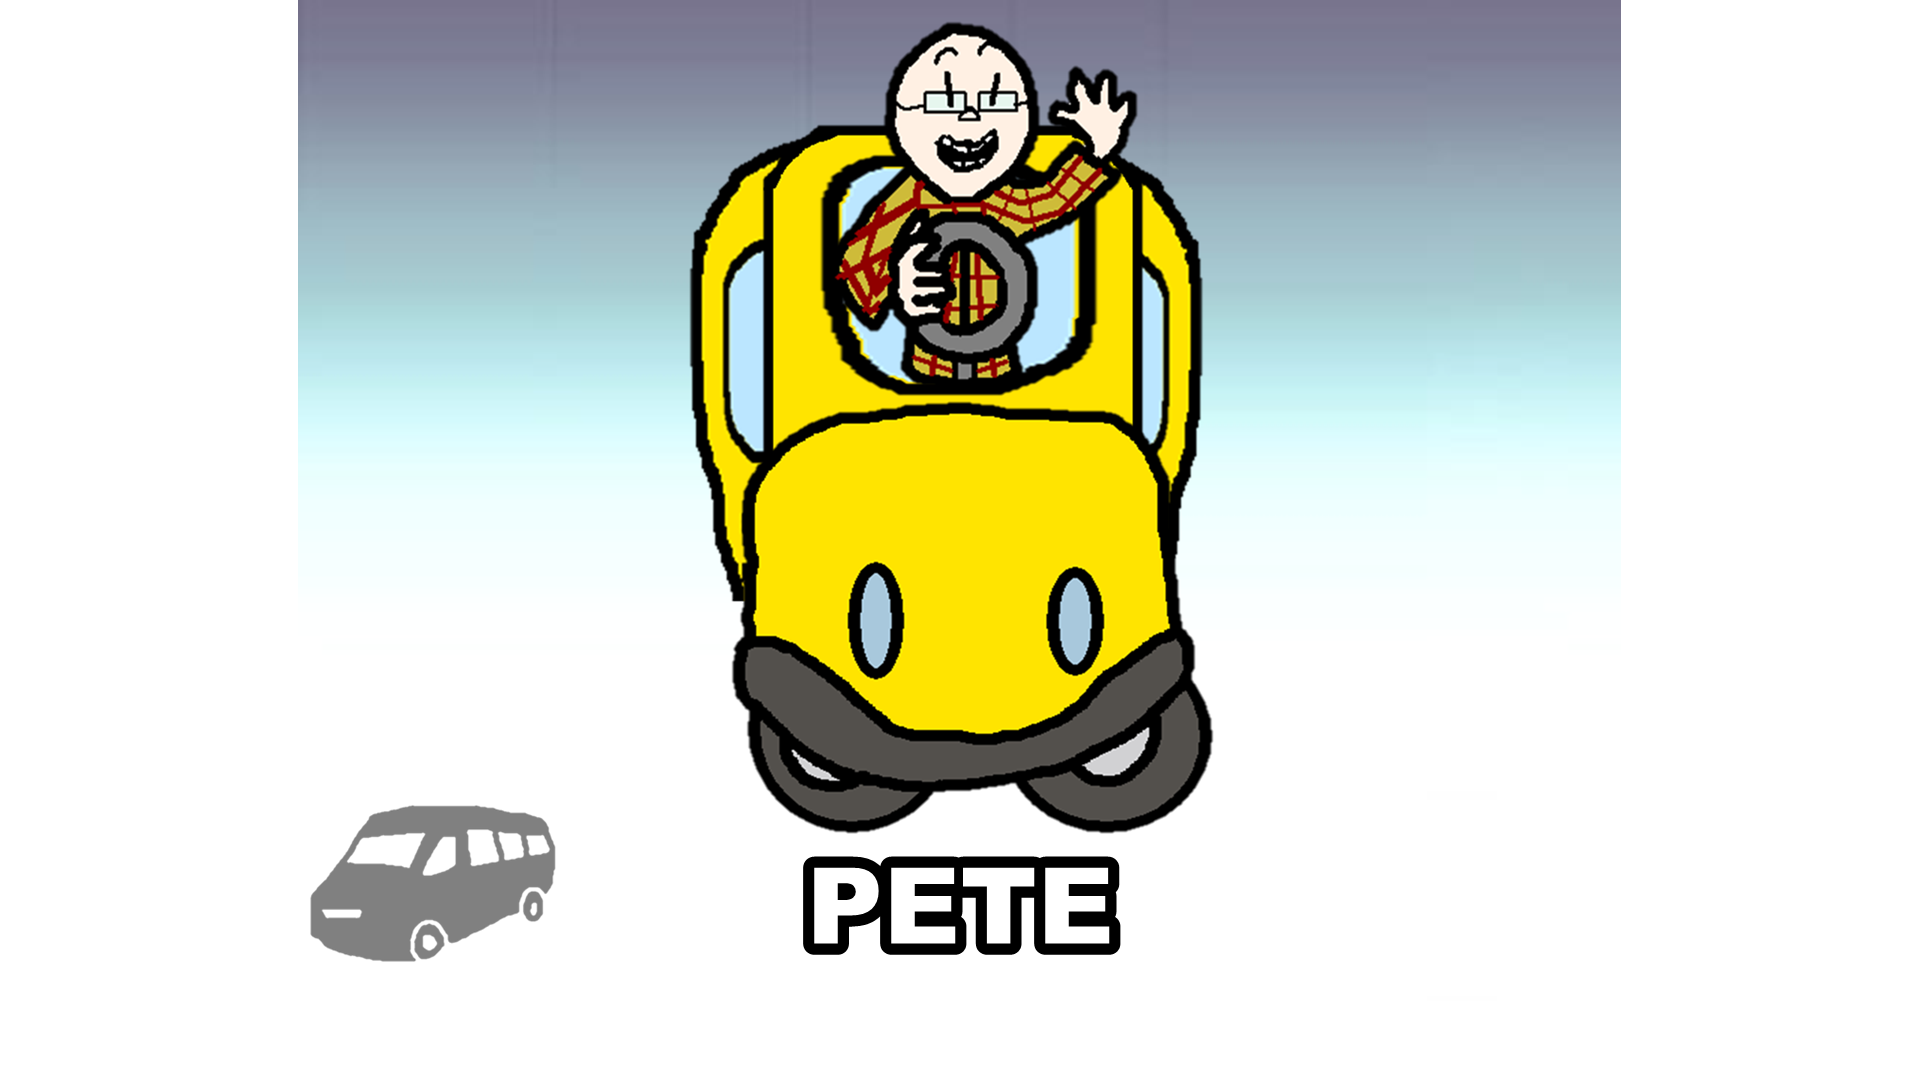 stick figure bus driver cartoon